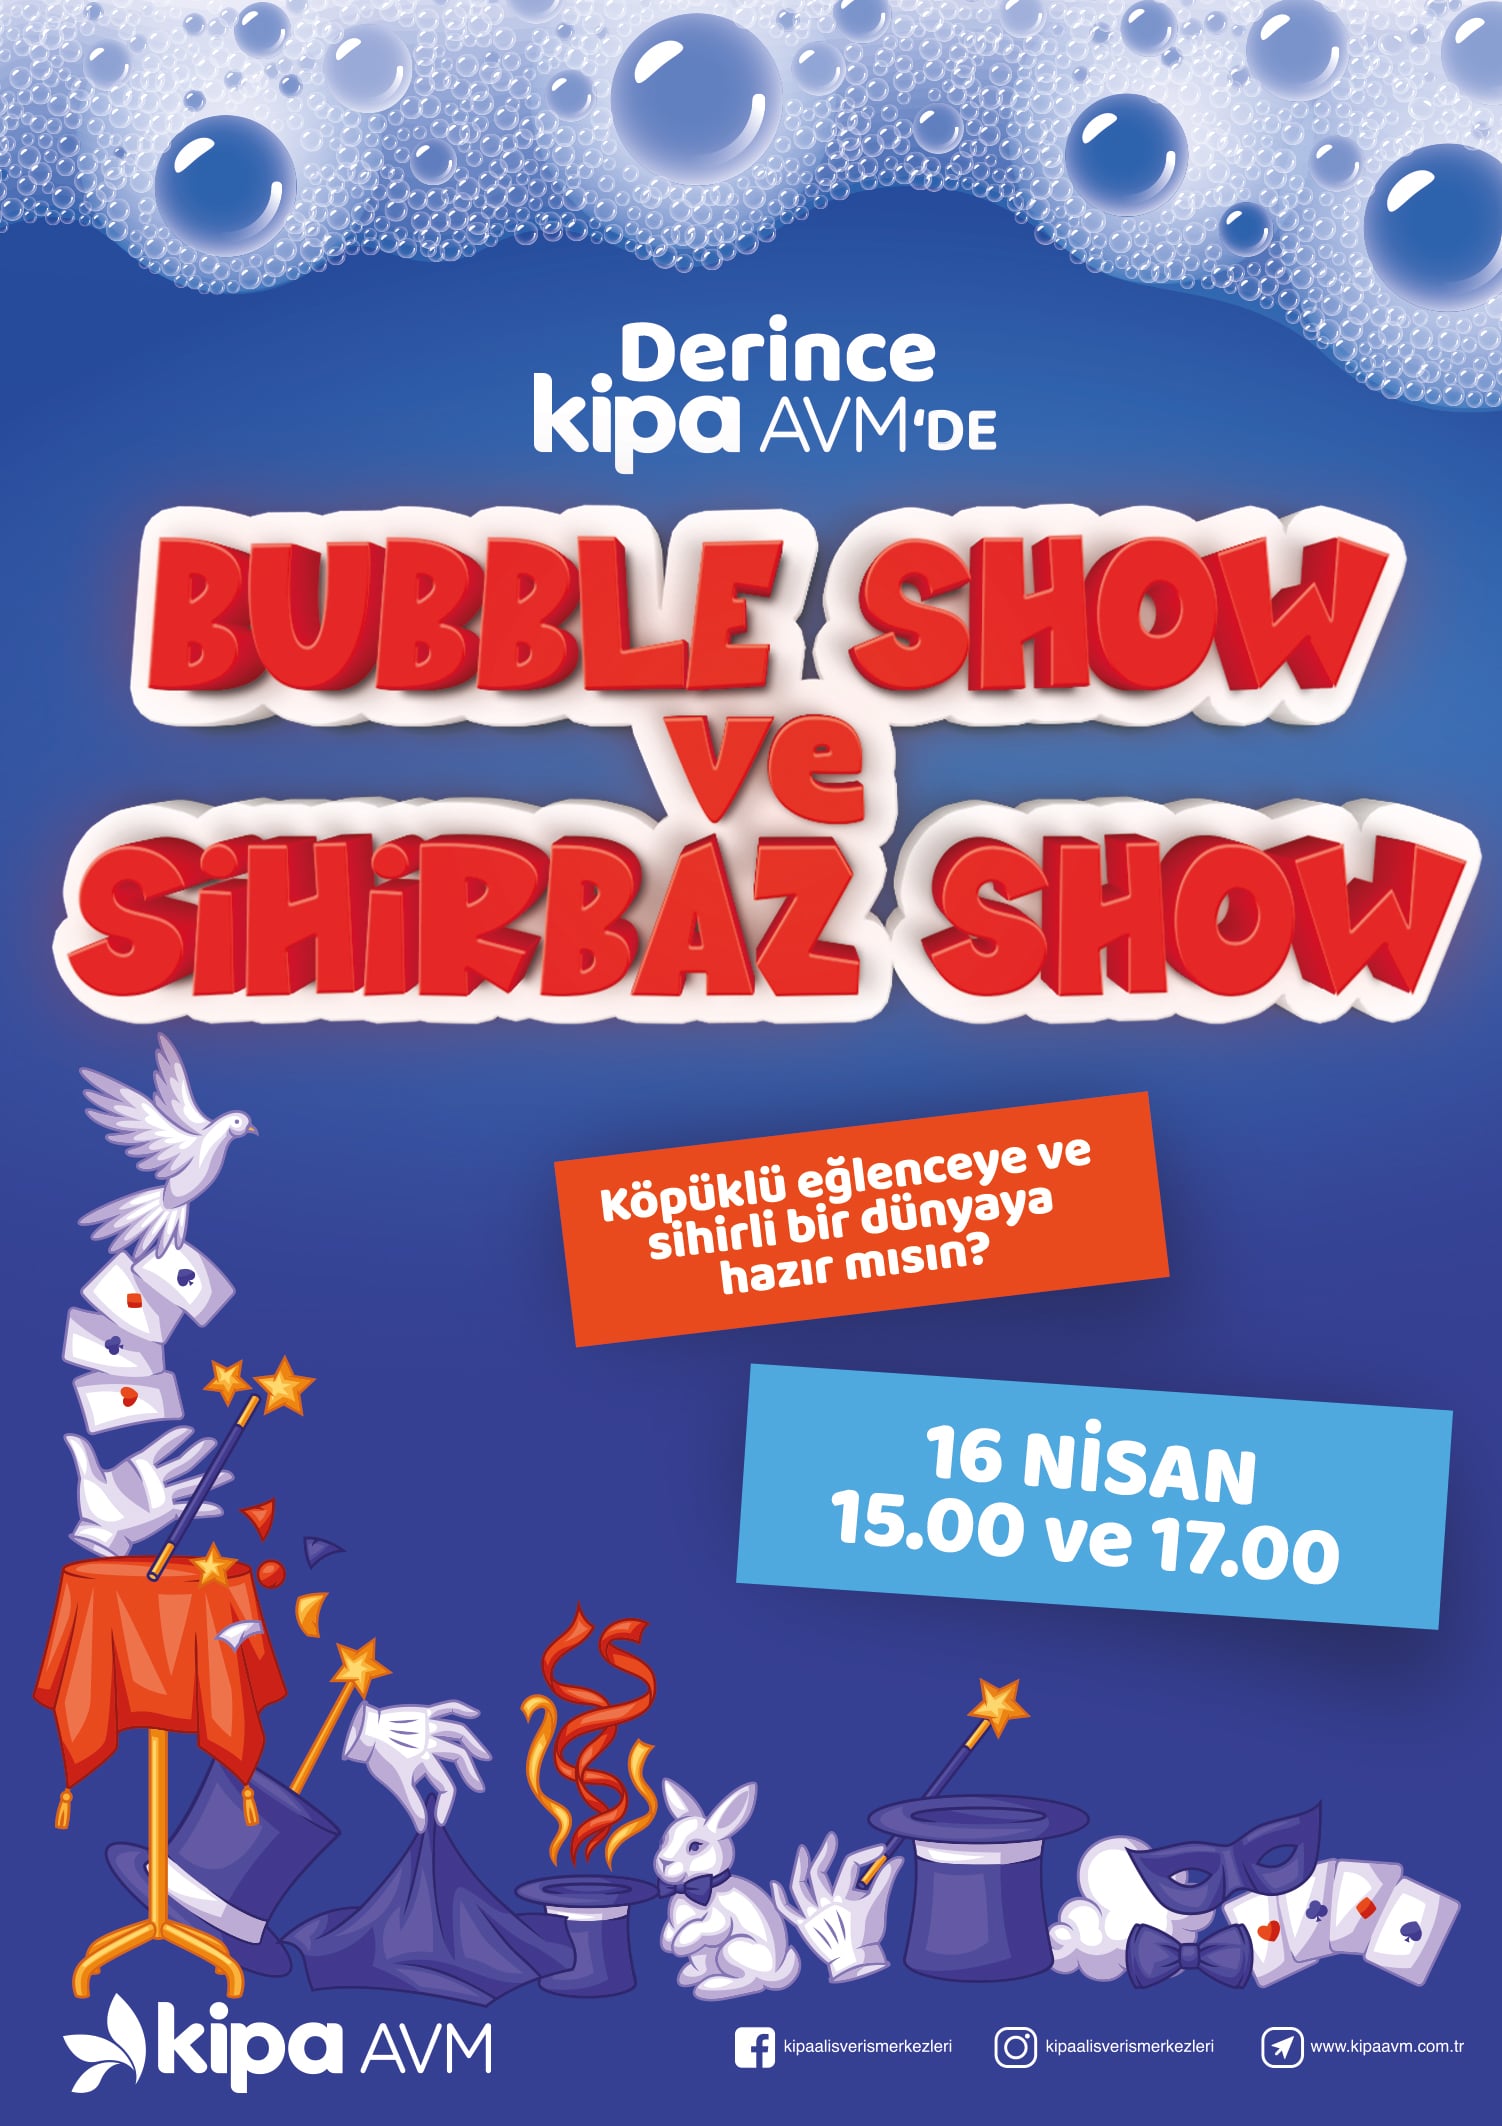 Bubble Show ve Shirbaz Show Derince Kipa AVM'de!